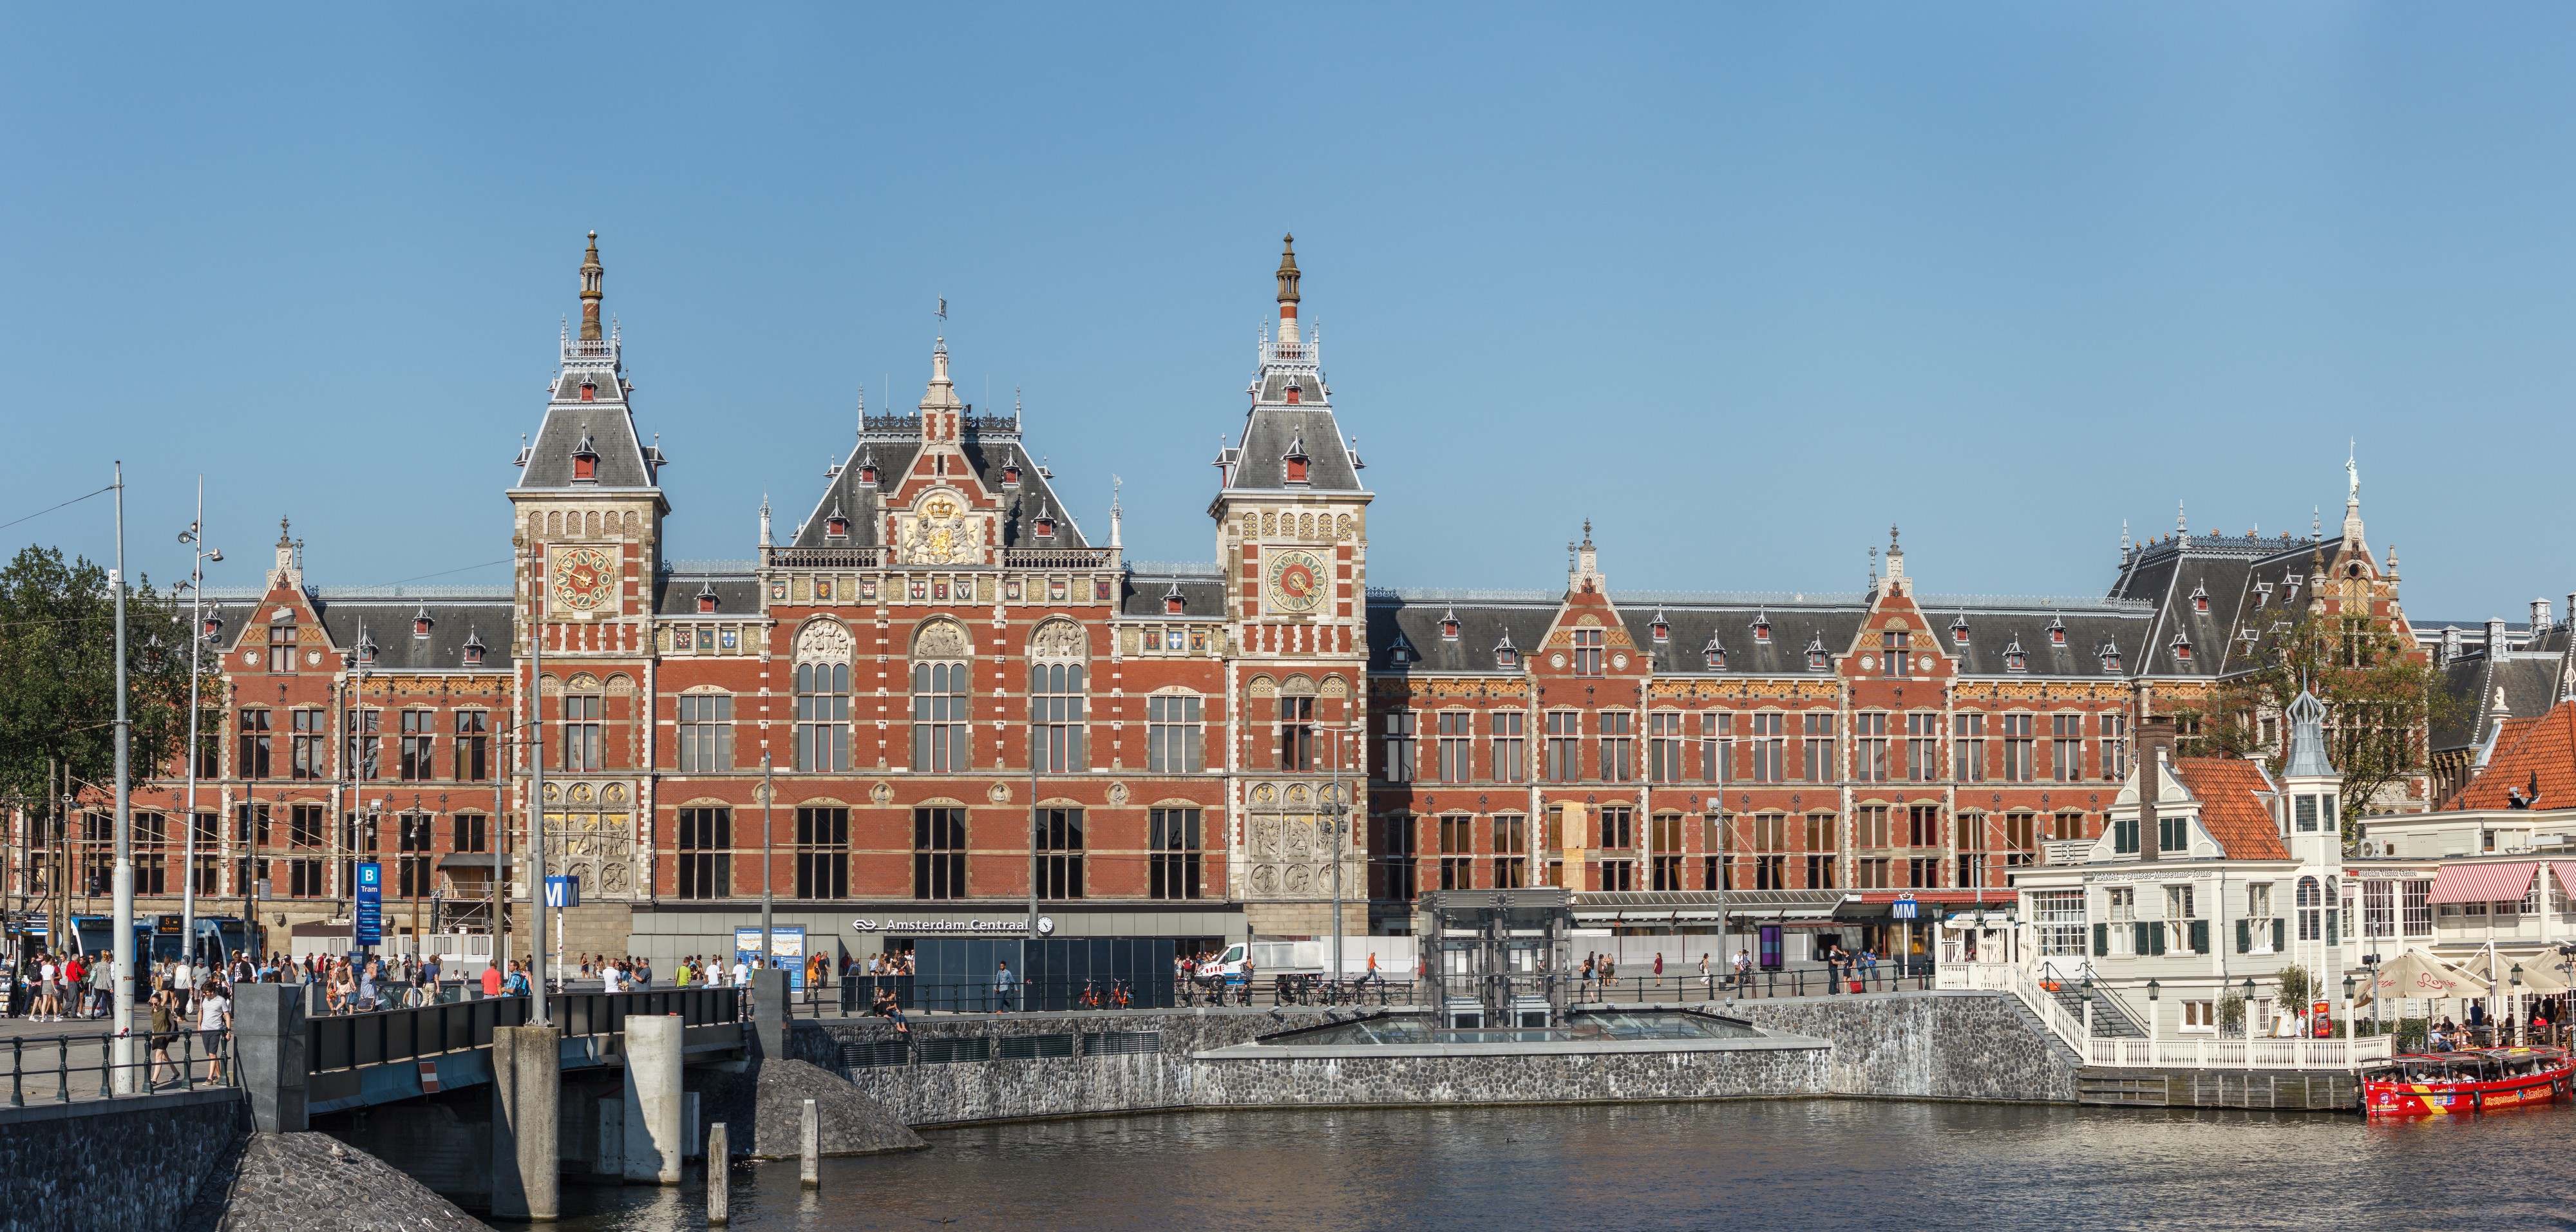 Amsterdam Centraal 2016-09-13